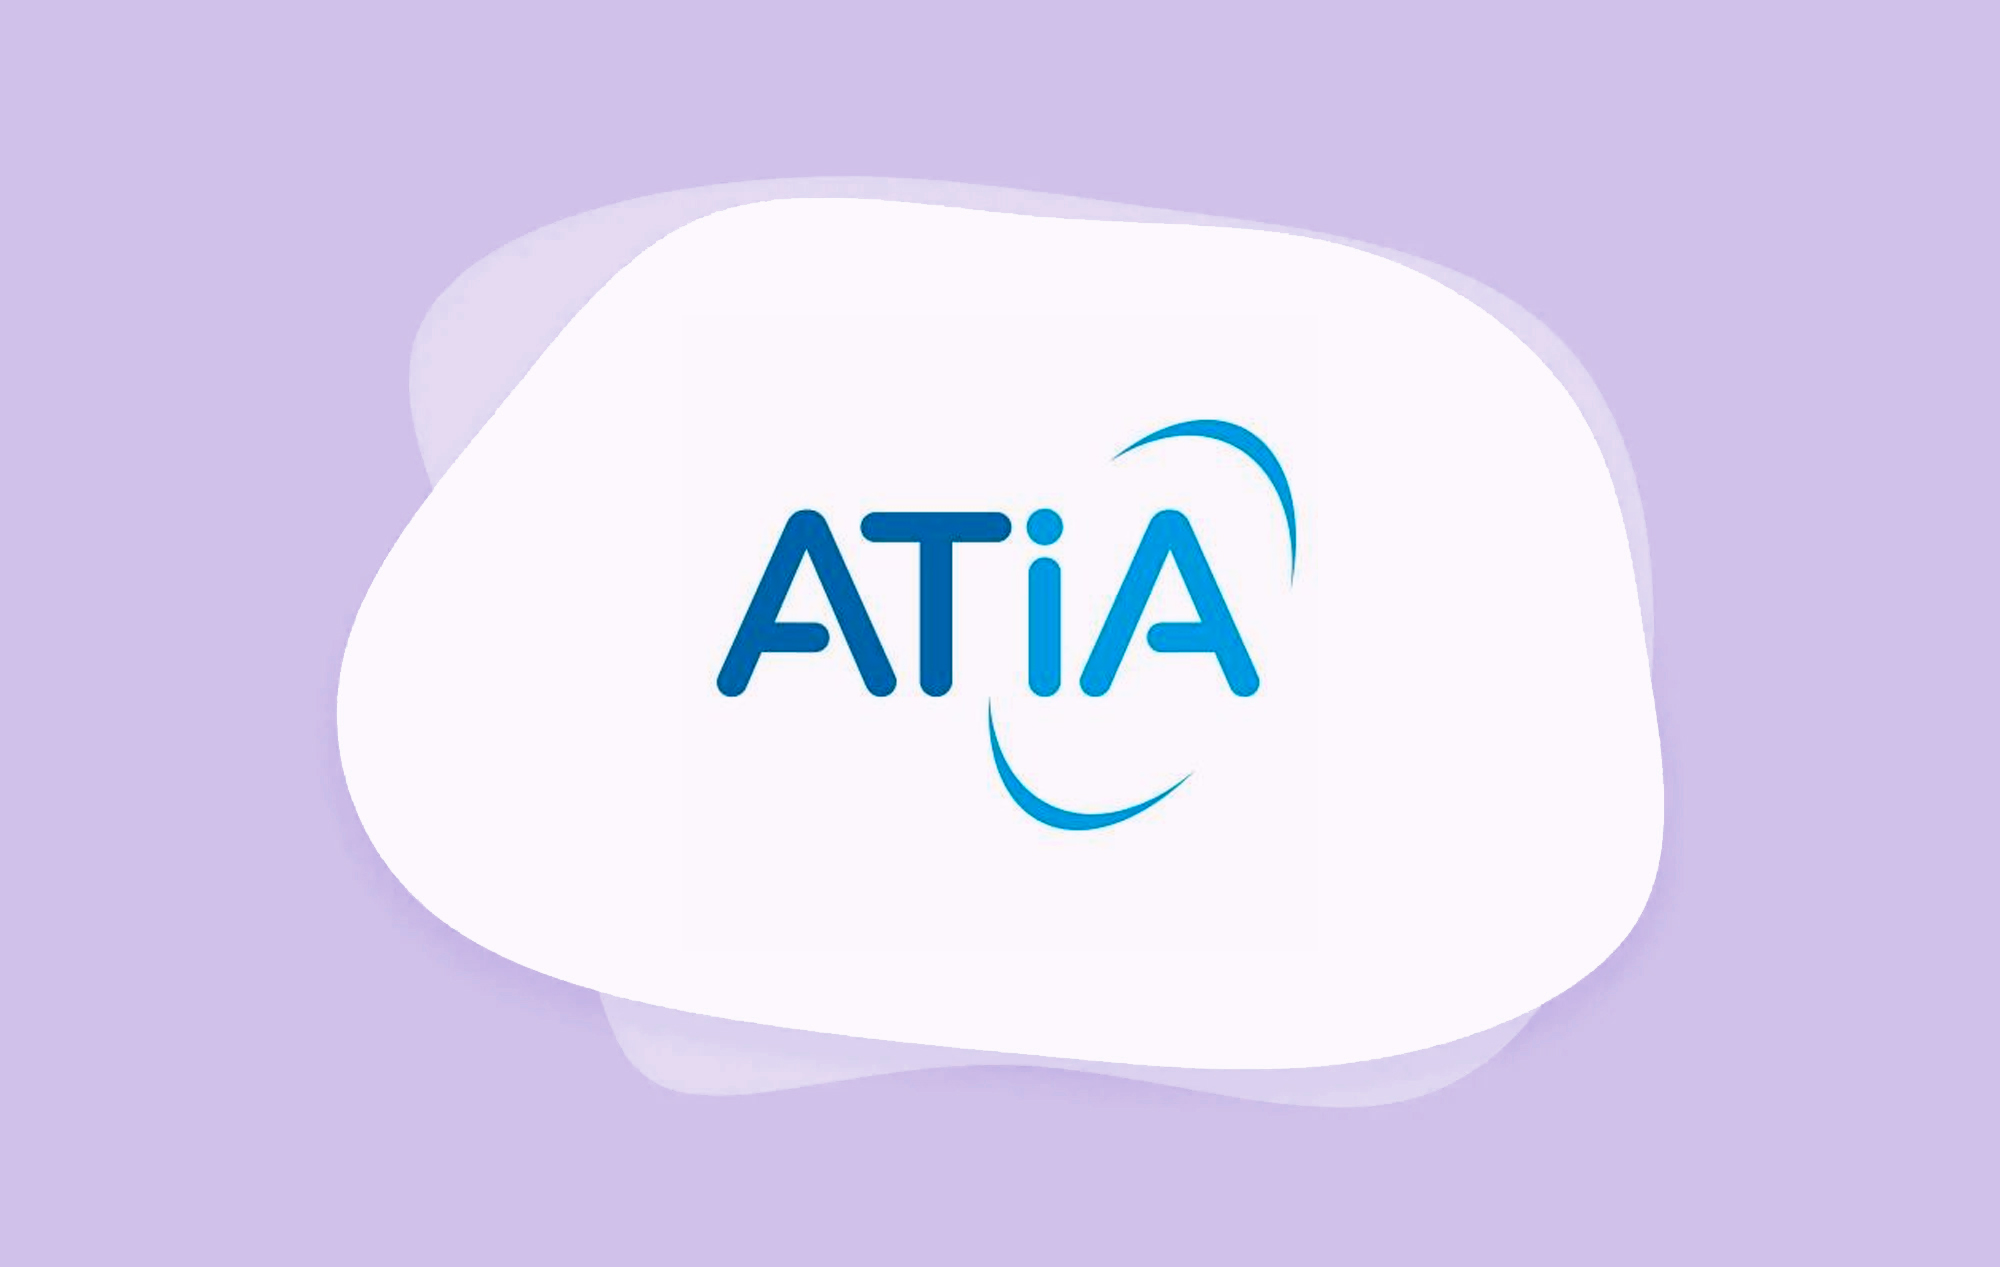 ATIA logo on cloud-like illustration with a light purple background